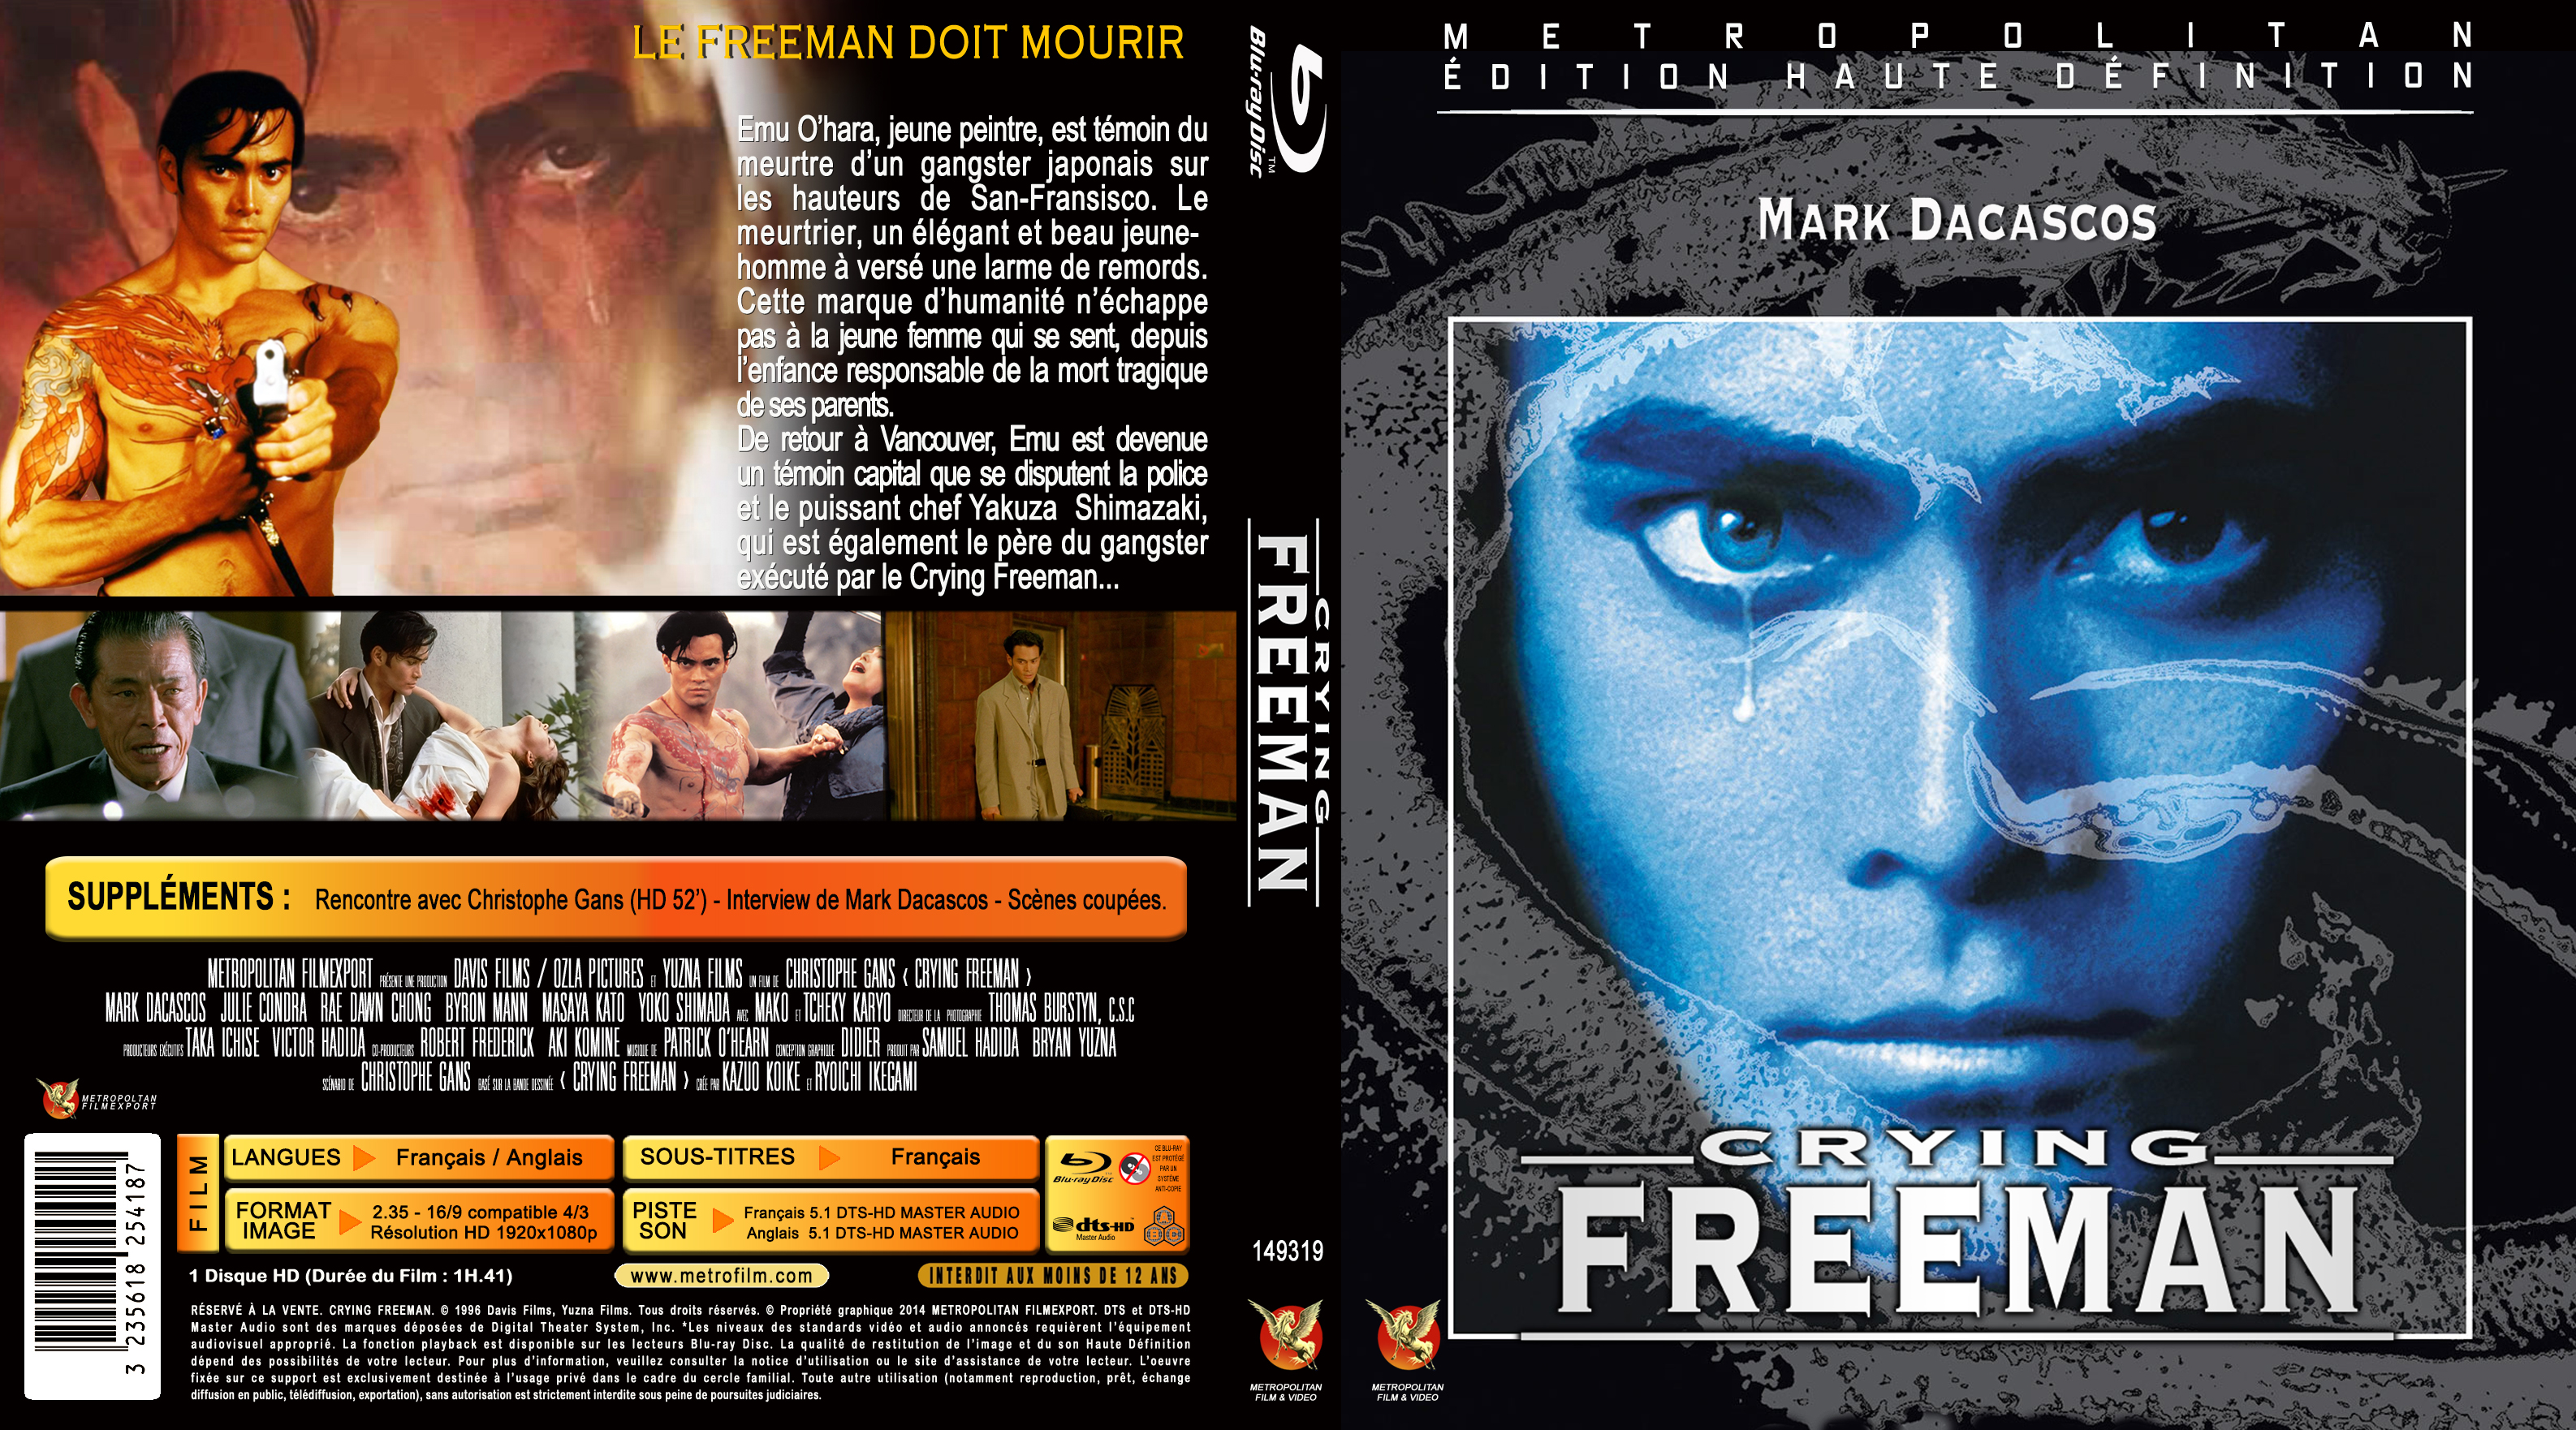 Jaquette DVD Crying freeman custom (BLU-RAY) v3